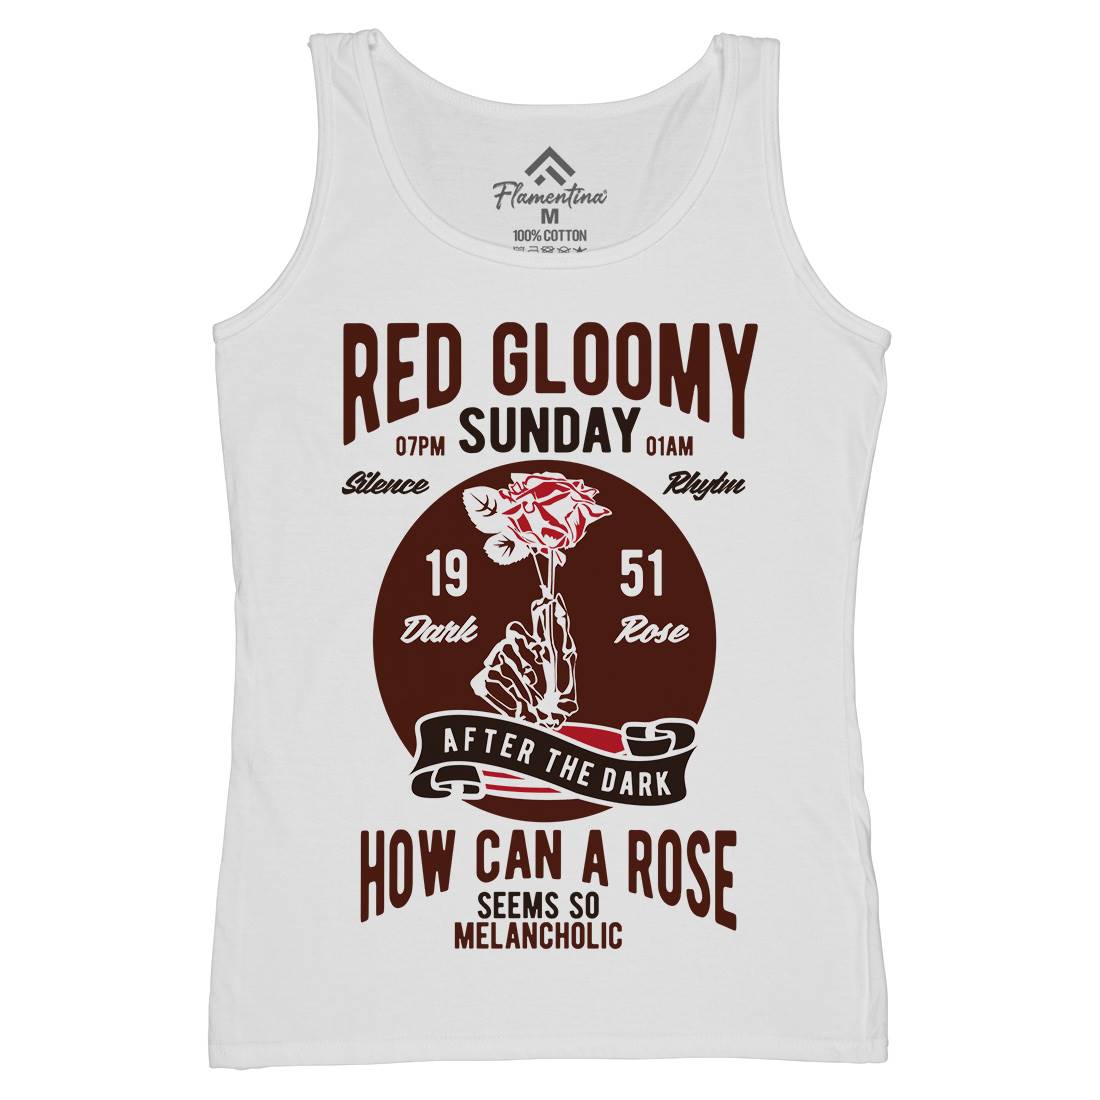 Red Gloomy Sunday Womens Organic Tank Top Vest Retro B437